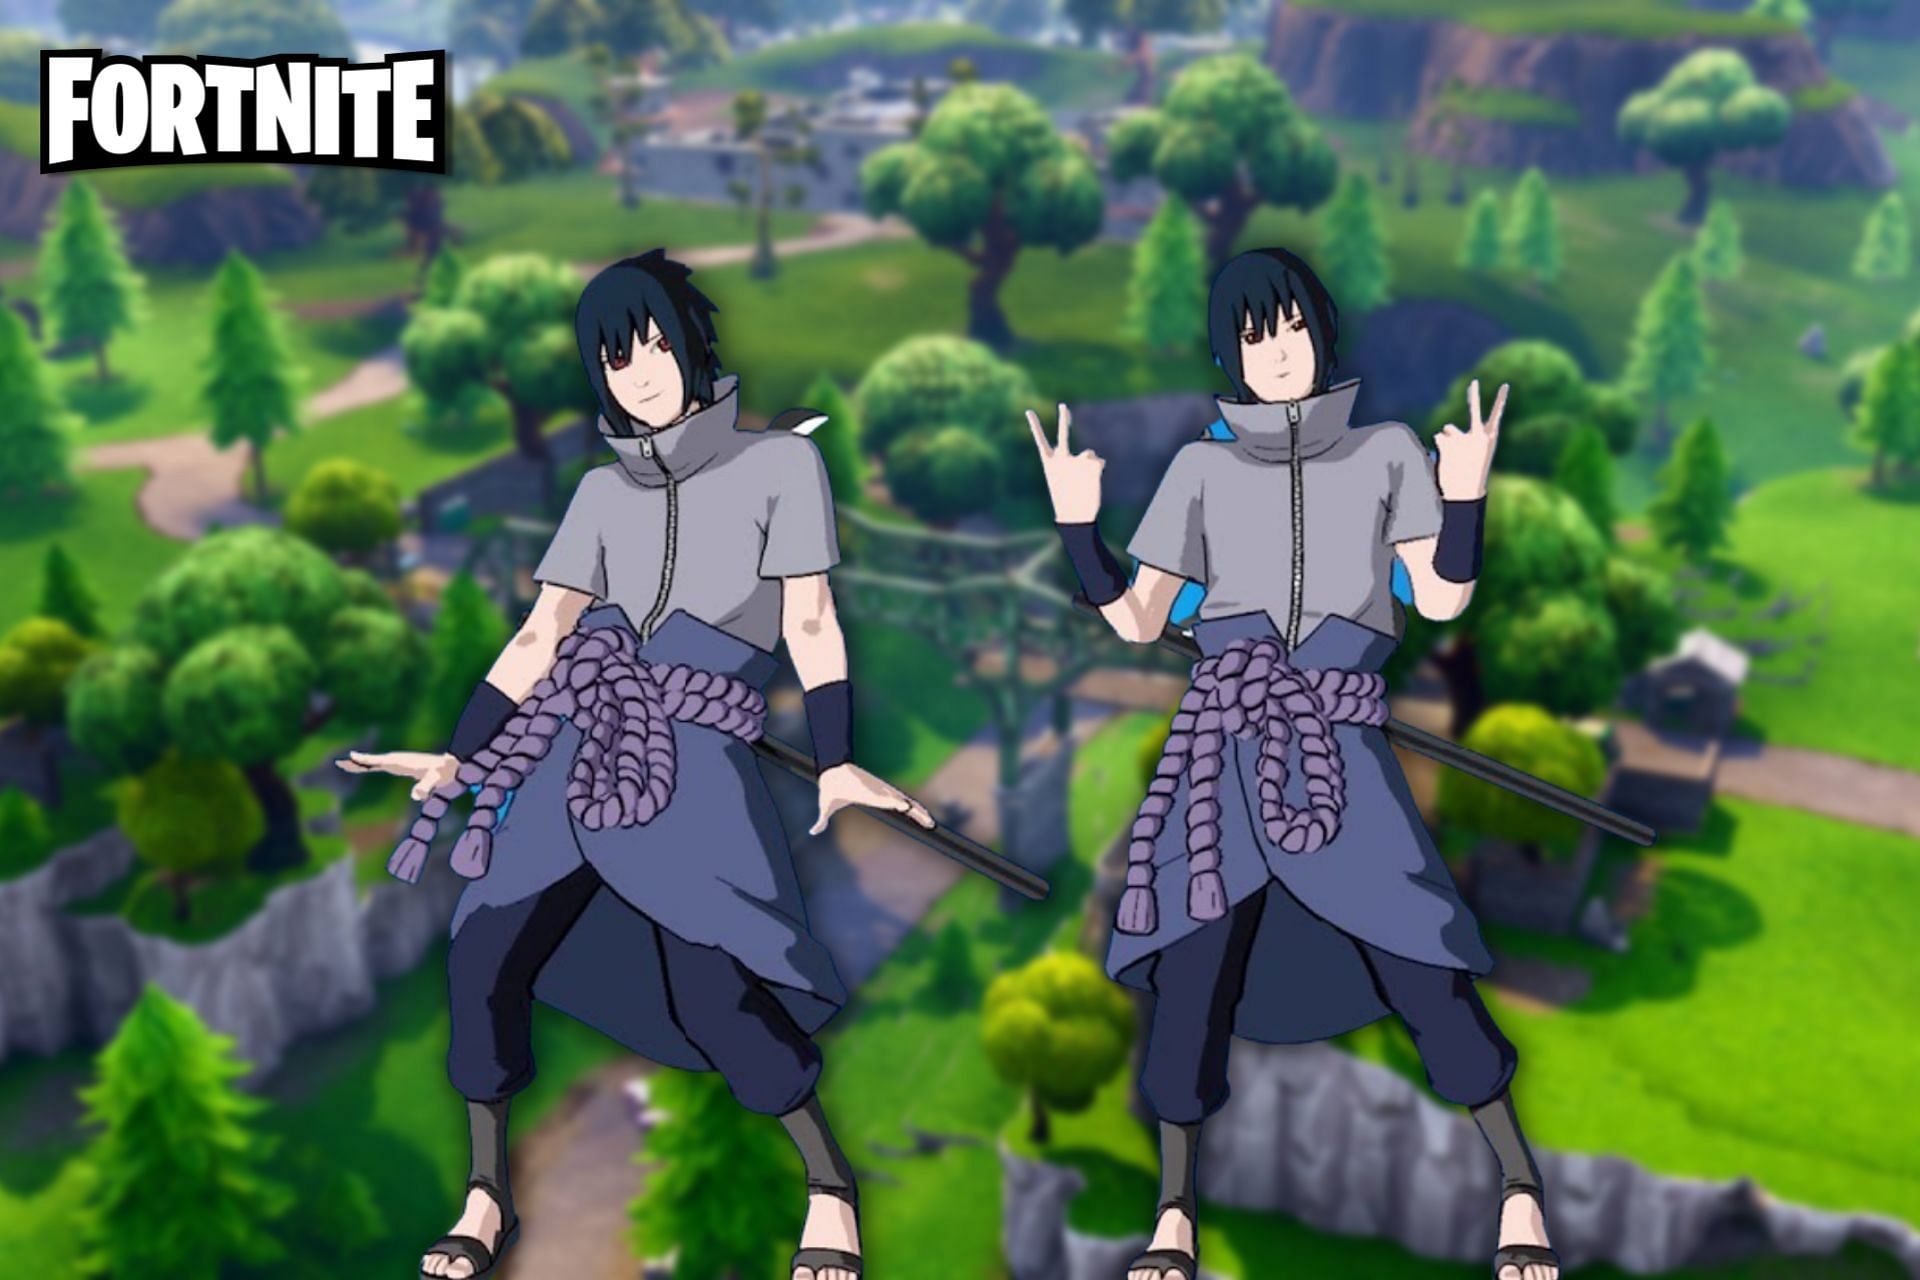 Sasuke doing Fortnite emotes (Image via Sportskeeda)